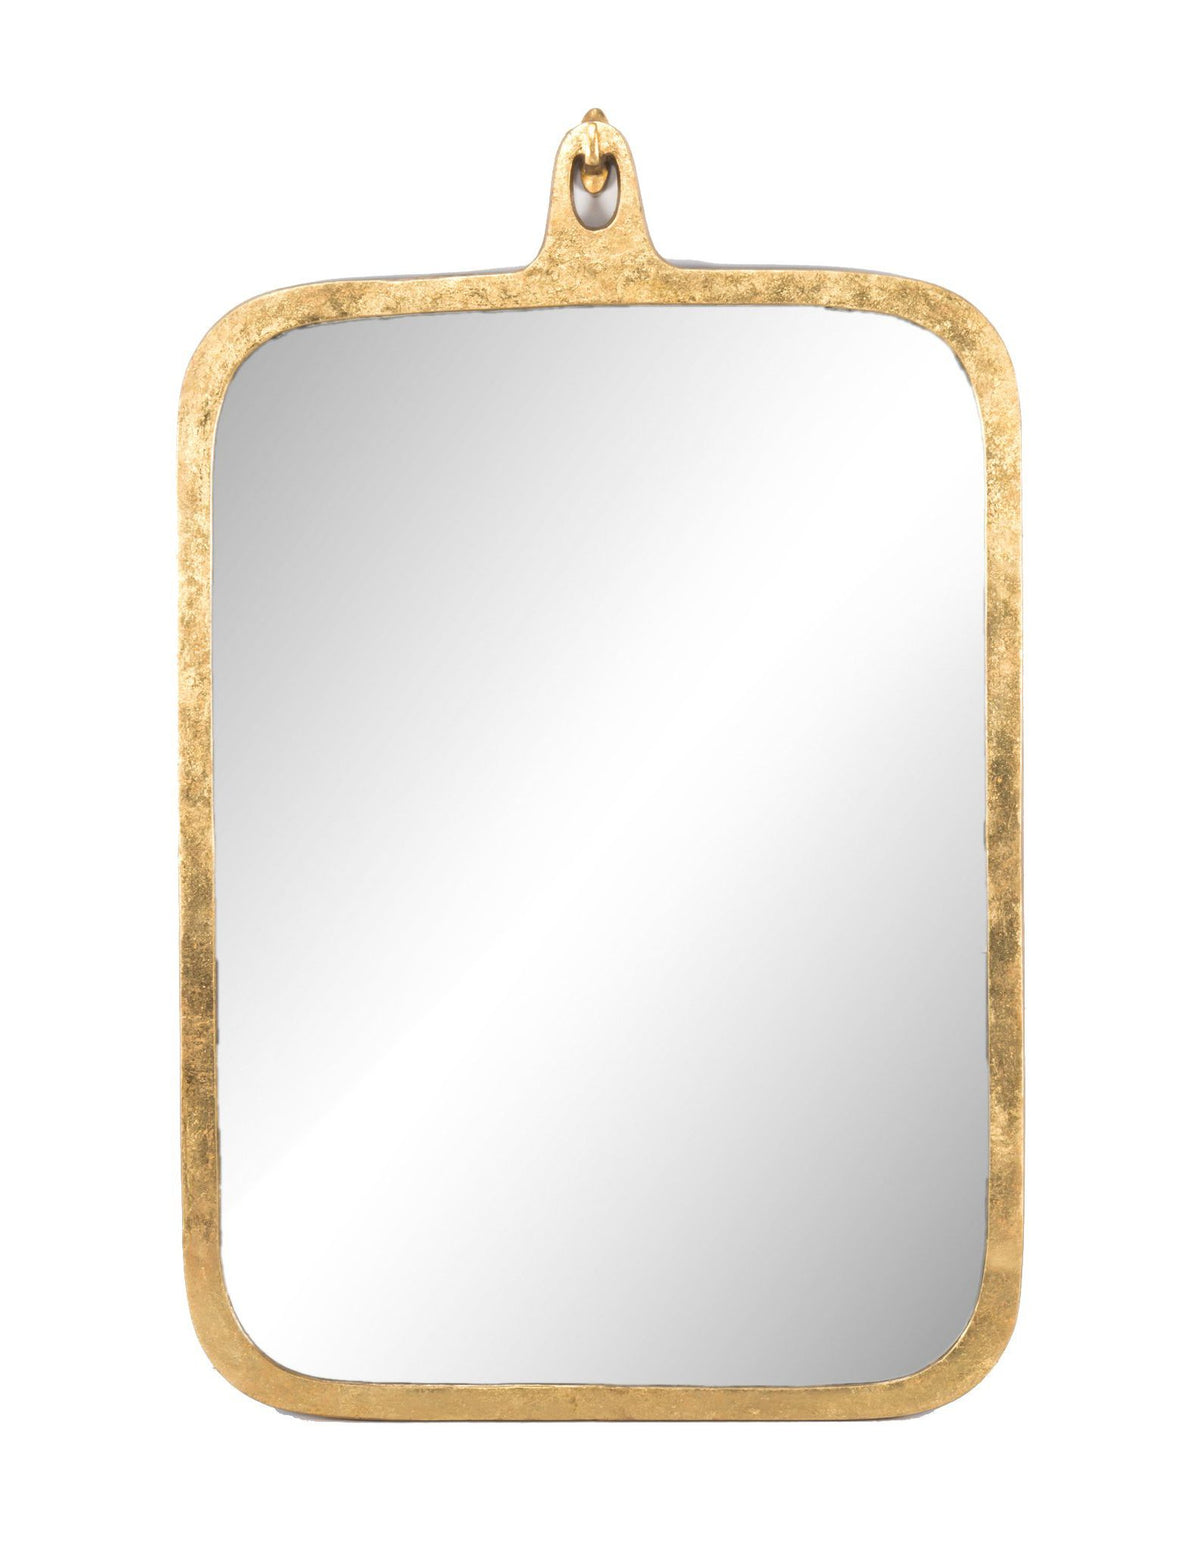 Handy Gold Decorative Mirror